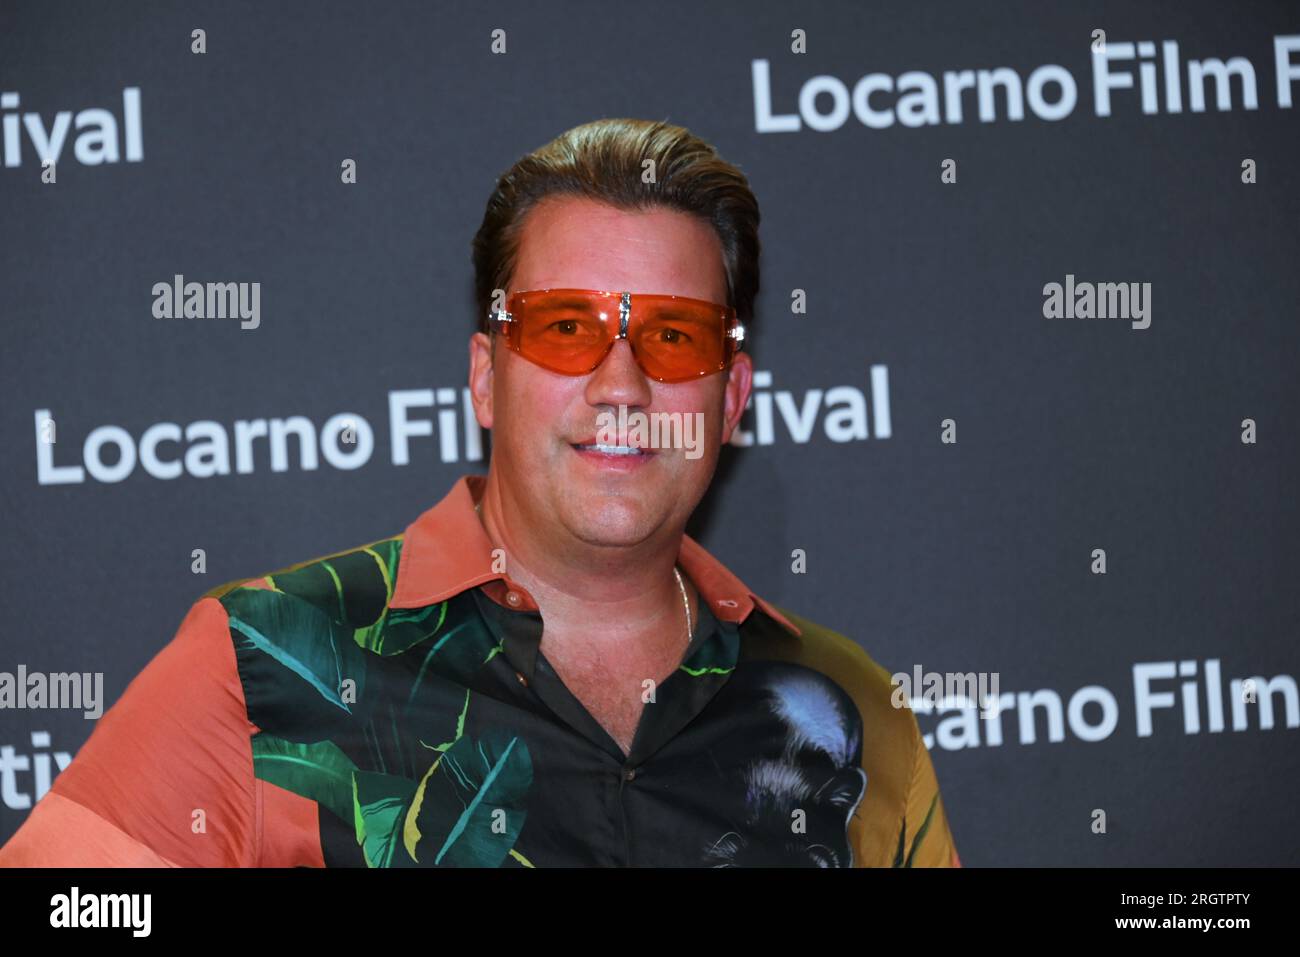 Locarno, . 11. Aug. 2023. Locarno, Swiss Locarno Film Festival 2023 Fotoaufruf auf rotem Teppich auf dem Foto:Antoine Konrad DJ Aantonie Credit: Independent Photo Agency/Alamy Live News Stockfoto